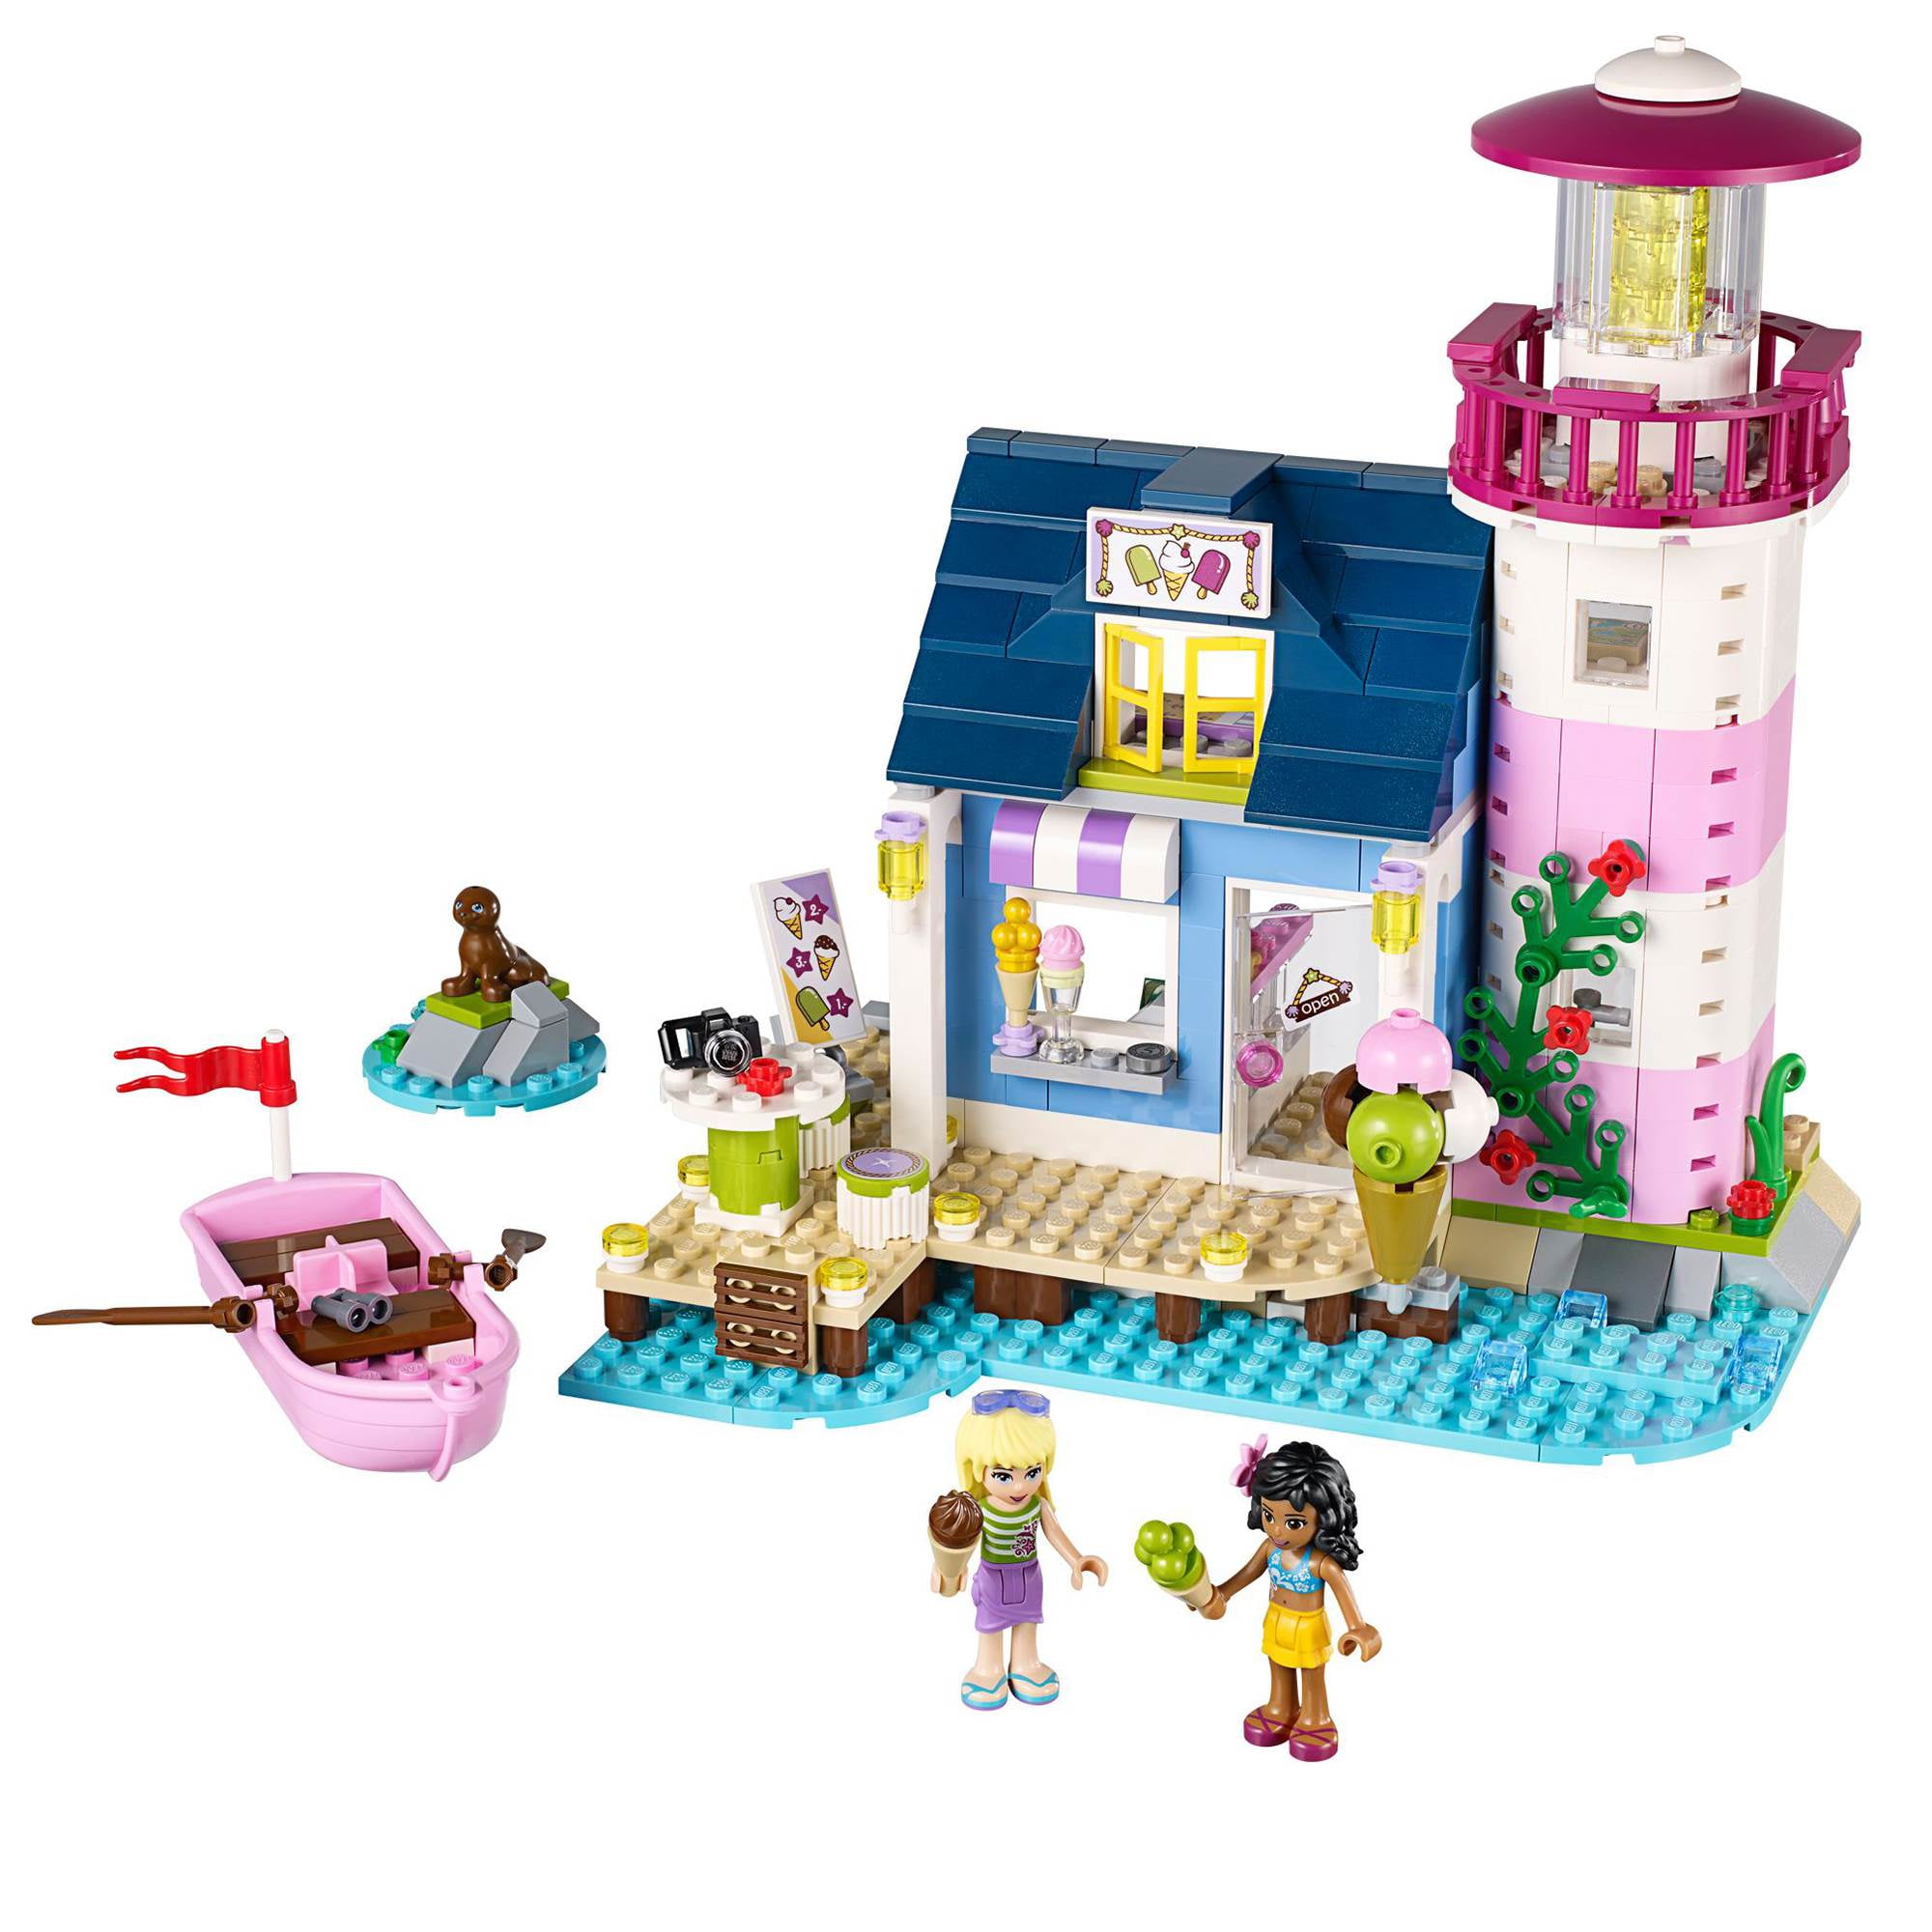 LEGO Friends Heartlake Lighthouse - Walmart.com